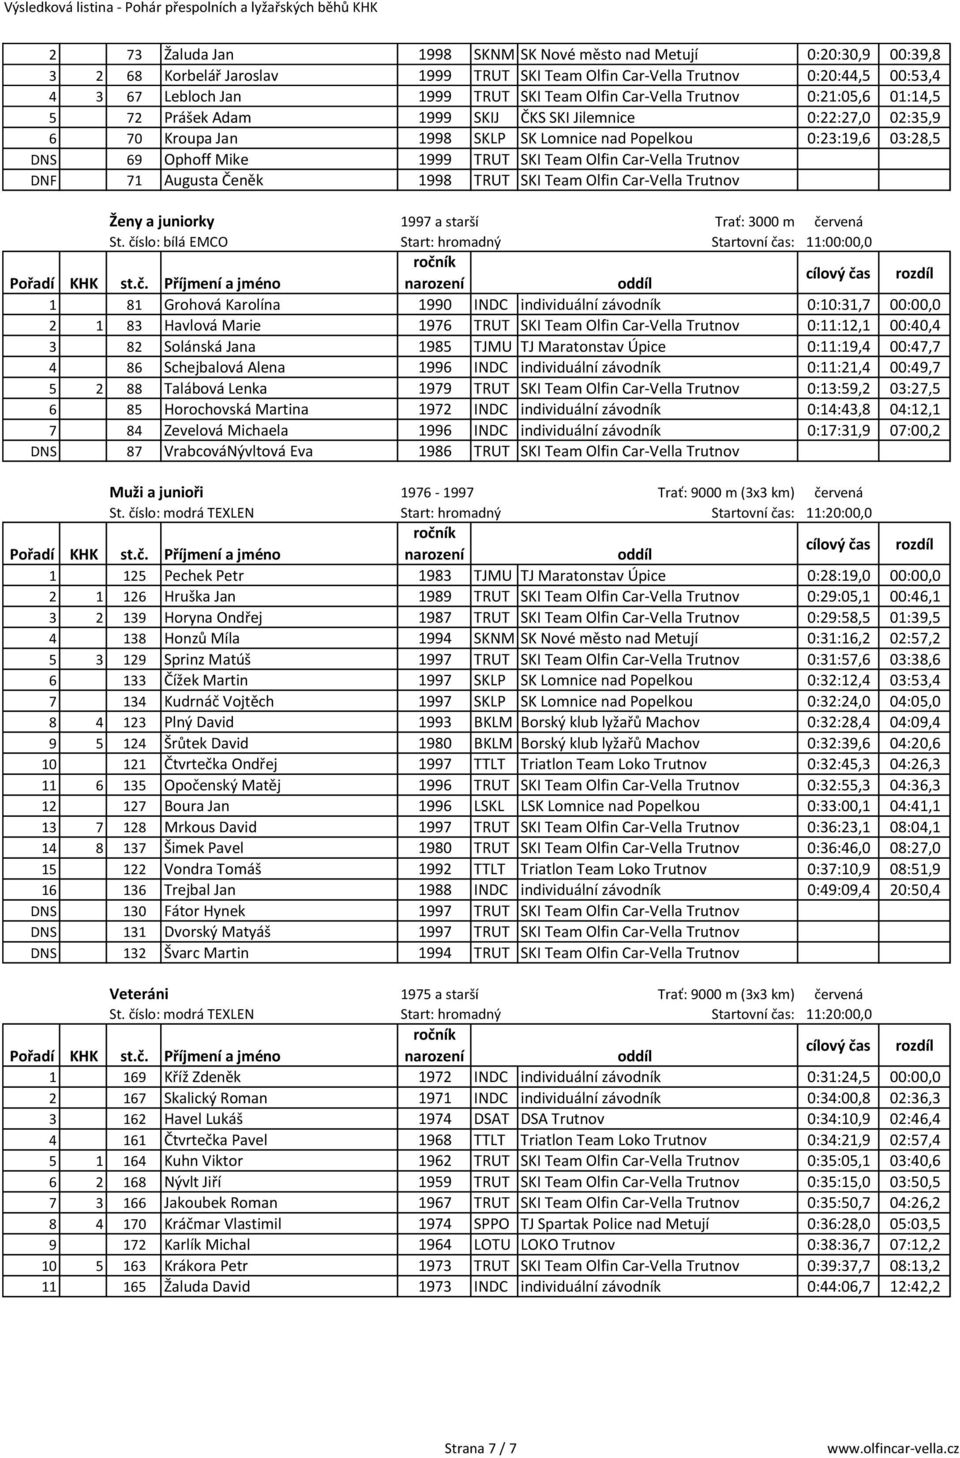 Team Olfin Car-Vella Trutnov DNF 71 Augusta Čeněk 1998 TRUT SKI Team Olfin Car-Vella Trutnov Ženy a juniorky 1997 a starší 1 81 Grohová Karolína 1990 INDC individuální závodník 0:10:31,7 00:00,0 2 1